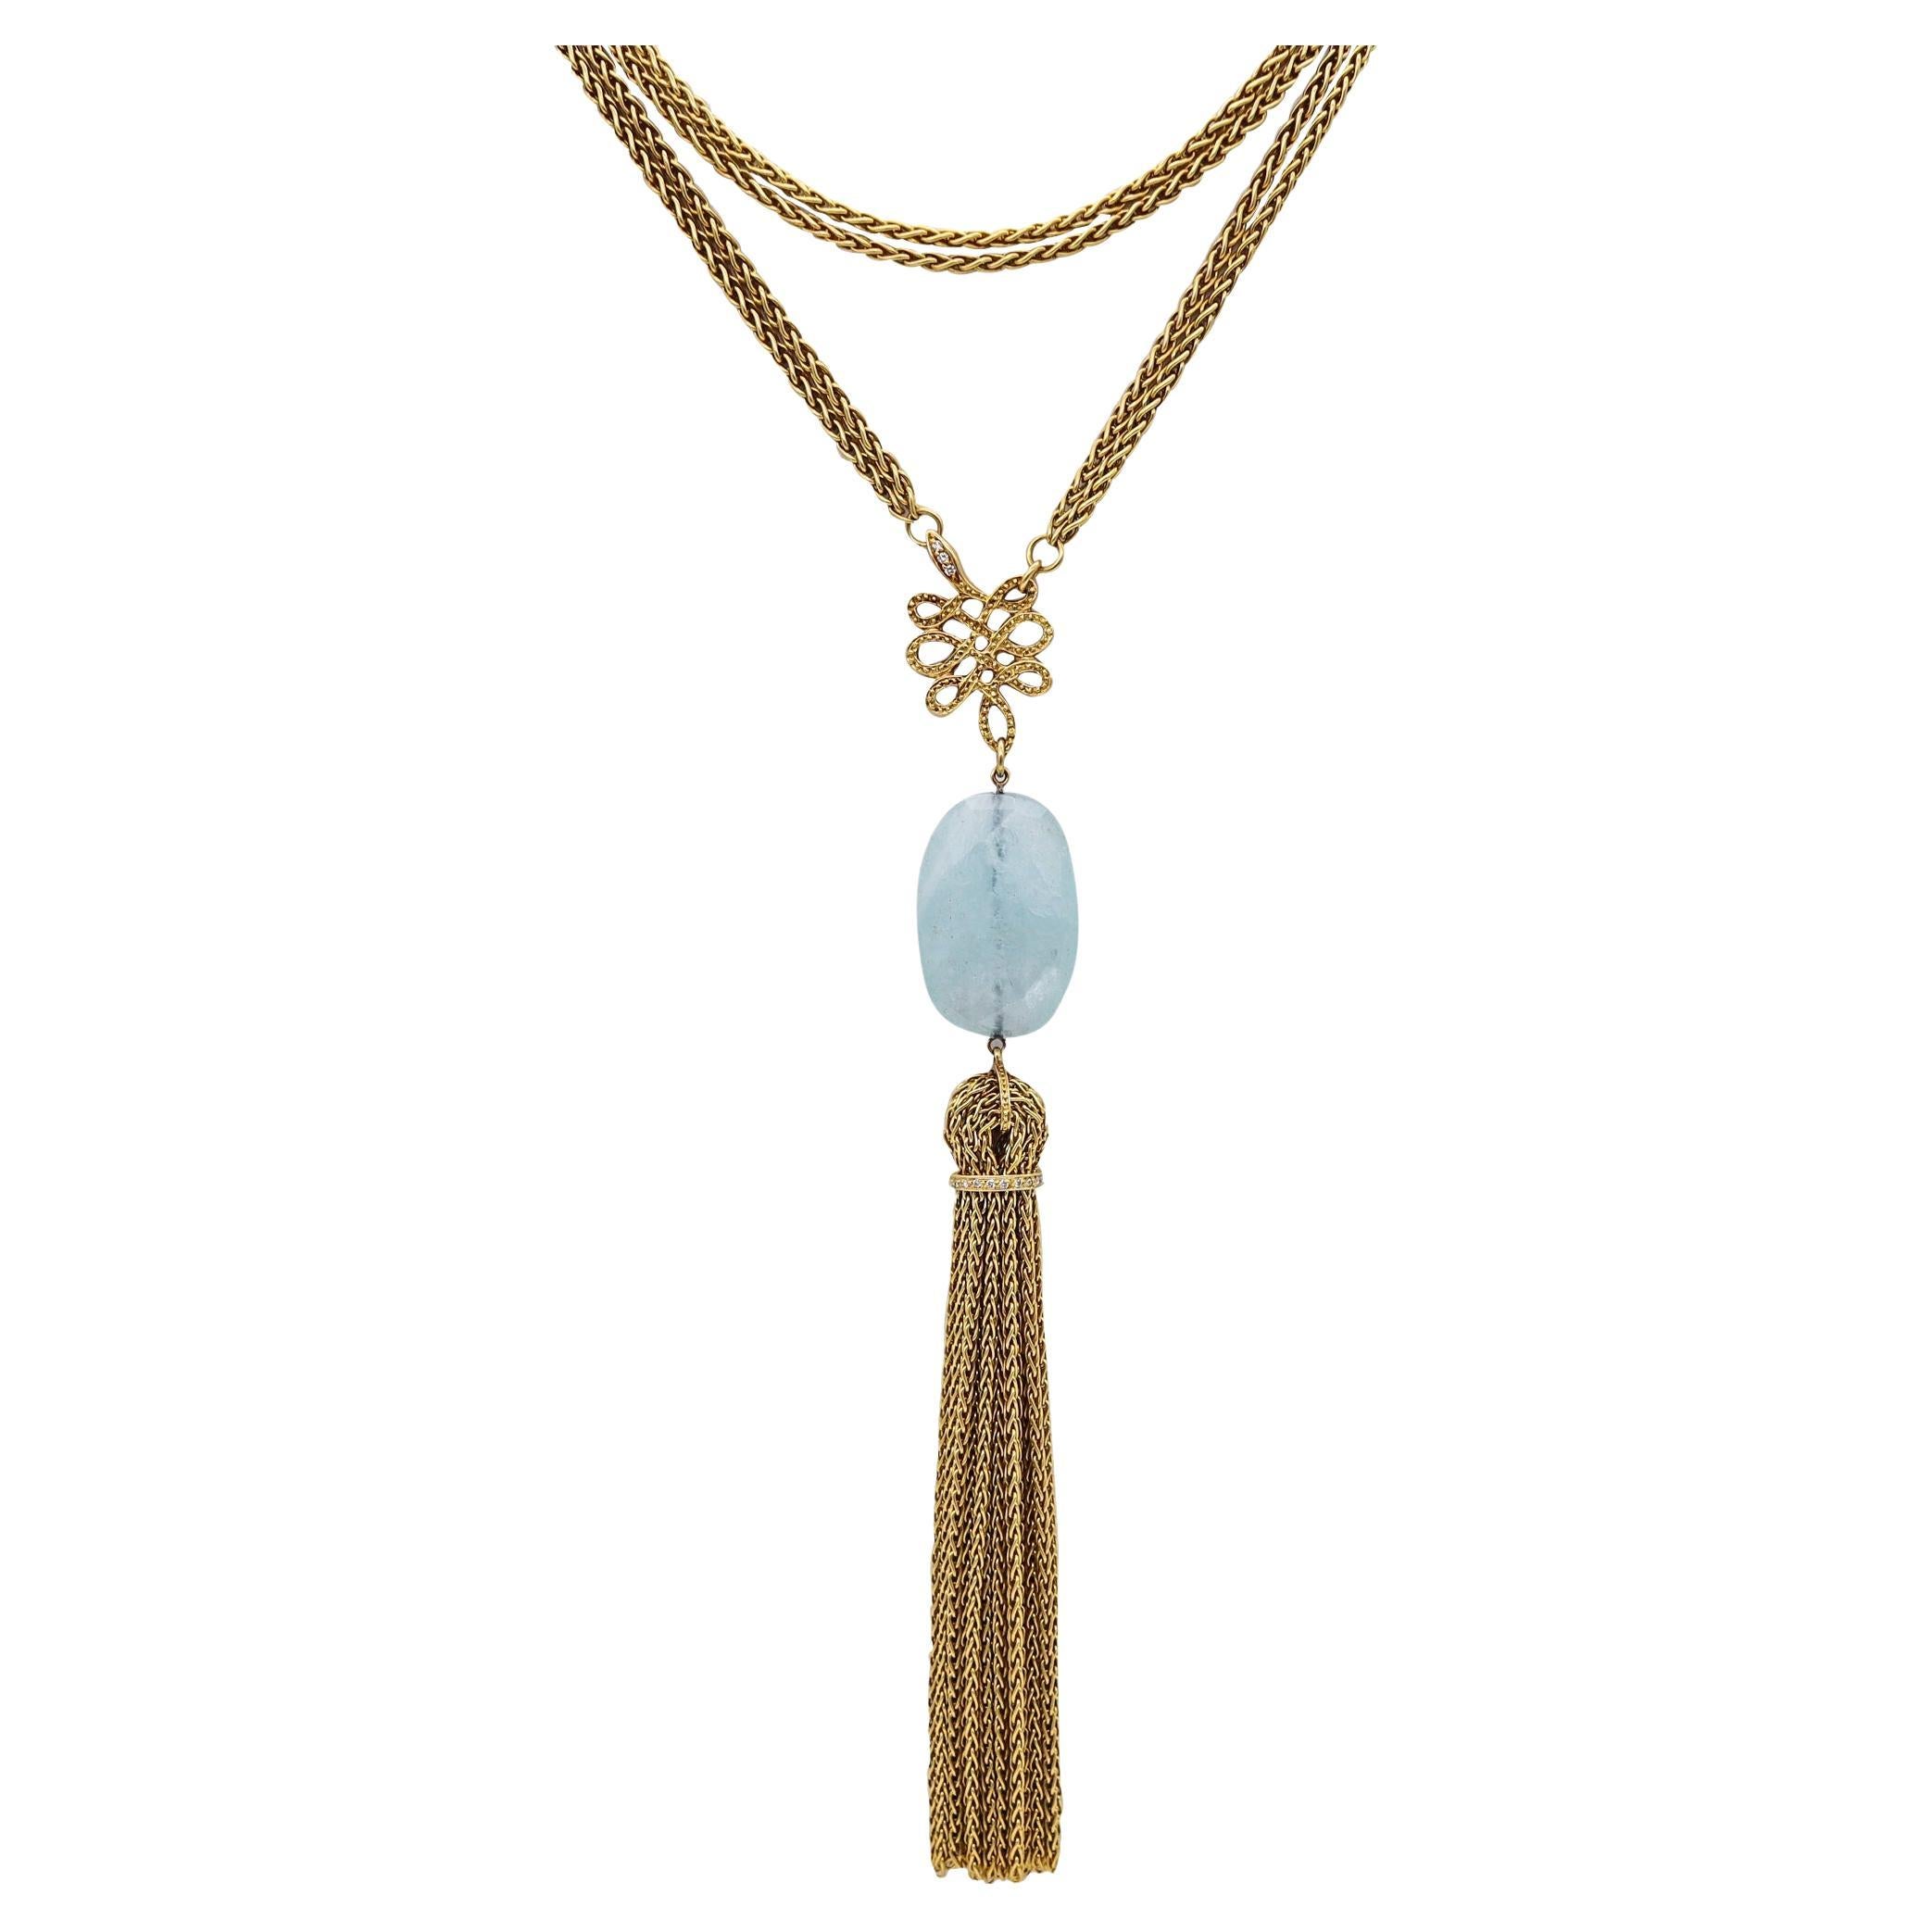 H Stern Diane von Furstenberg Long Necklace 18 Kt Gold with 22.45 Cts Aquamarine For Sale